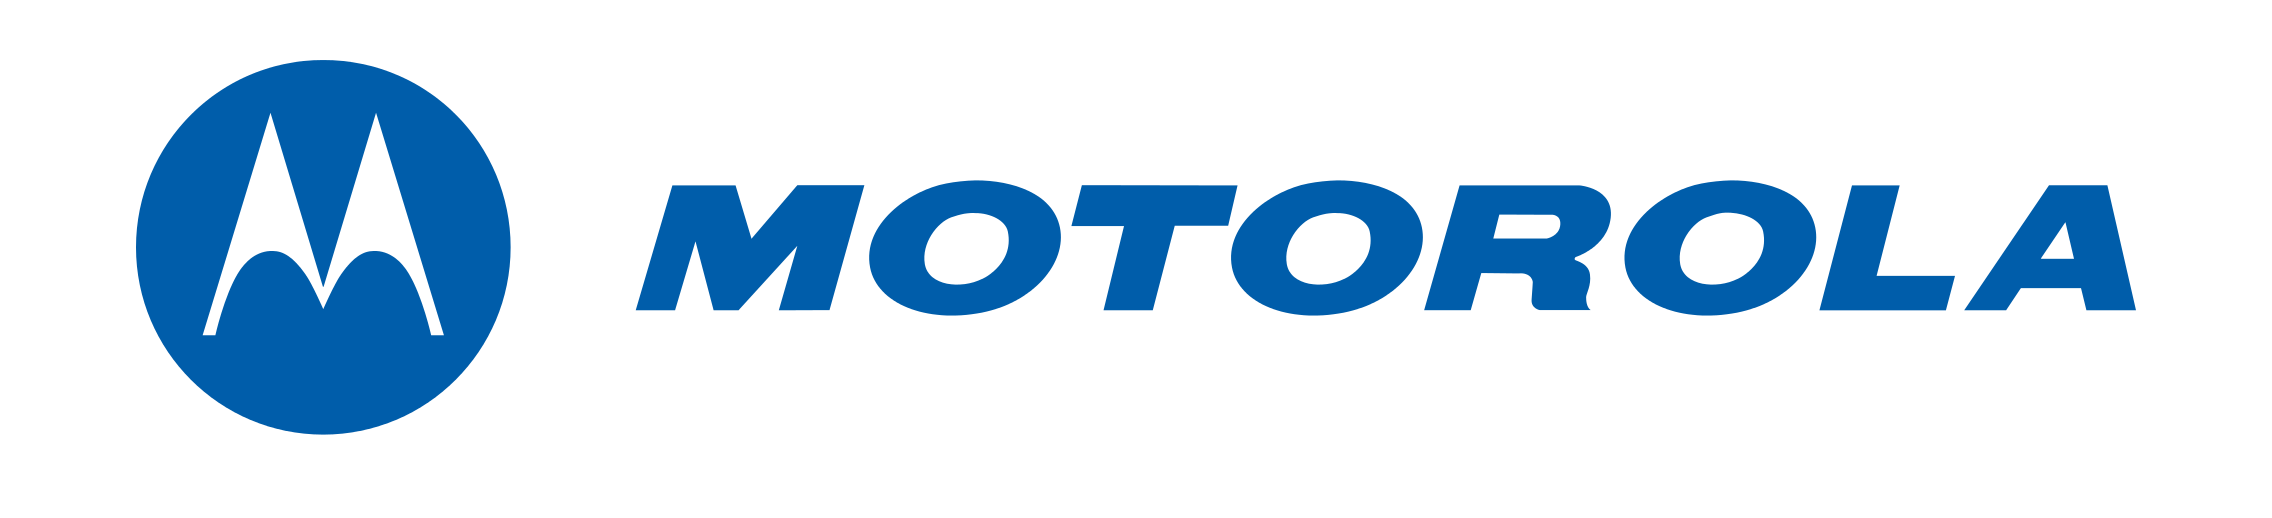 Motorola-logo-original-blue